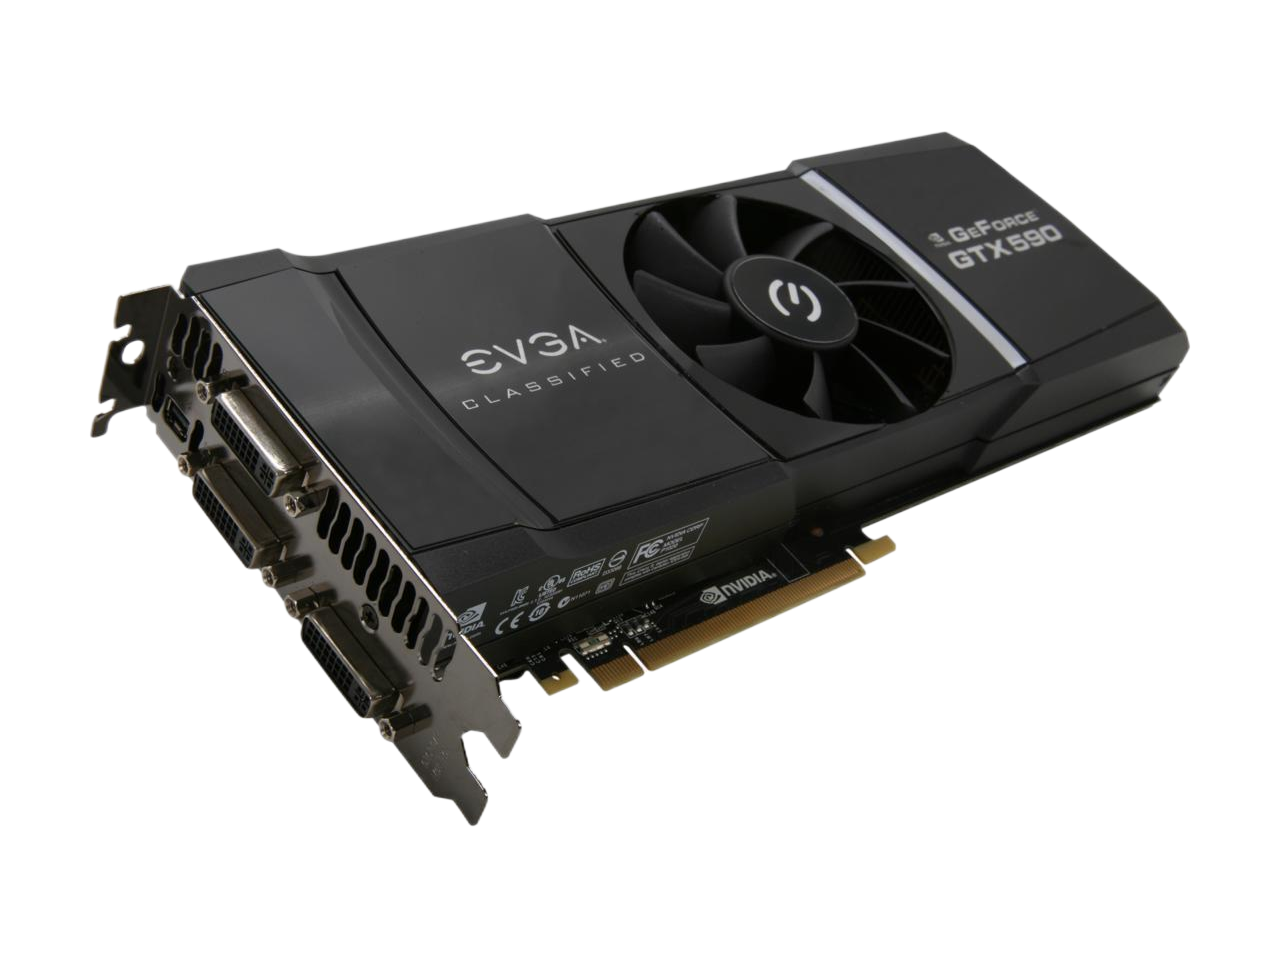 EVGA GeForce GTX 590 Classified 3072MB 768-bit GDDR5 PCI Express 2.0 x16 HDCP Ready SLI Support Video Card 03G-P3-1596-AR